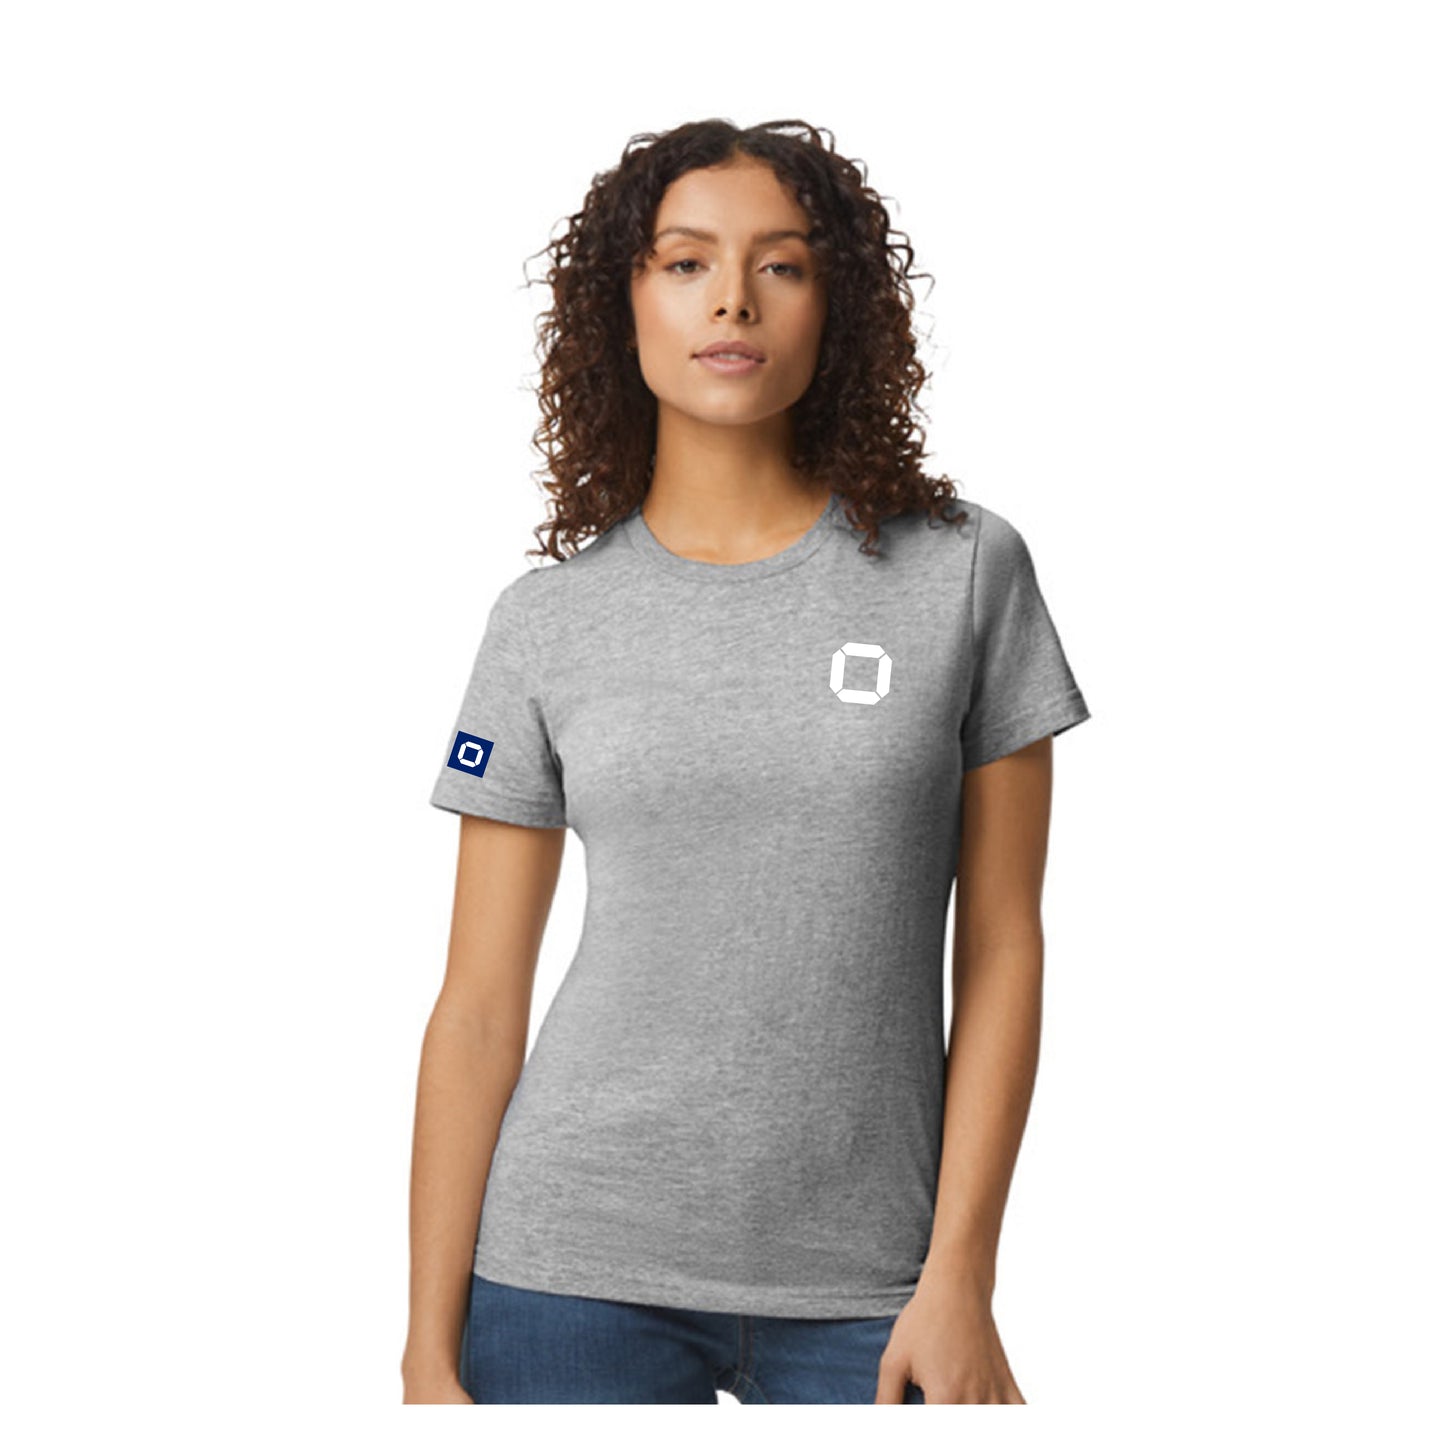 Cyber Force ® Portal Cotton T-Shirt